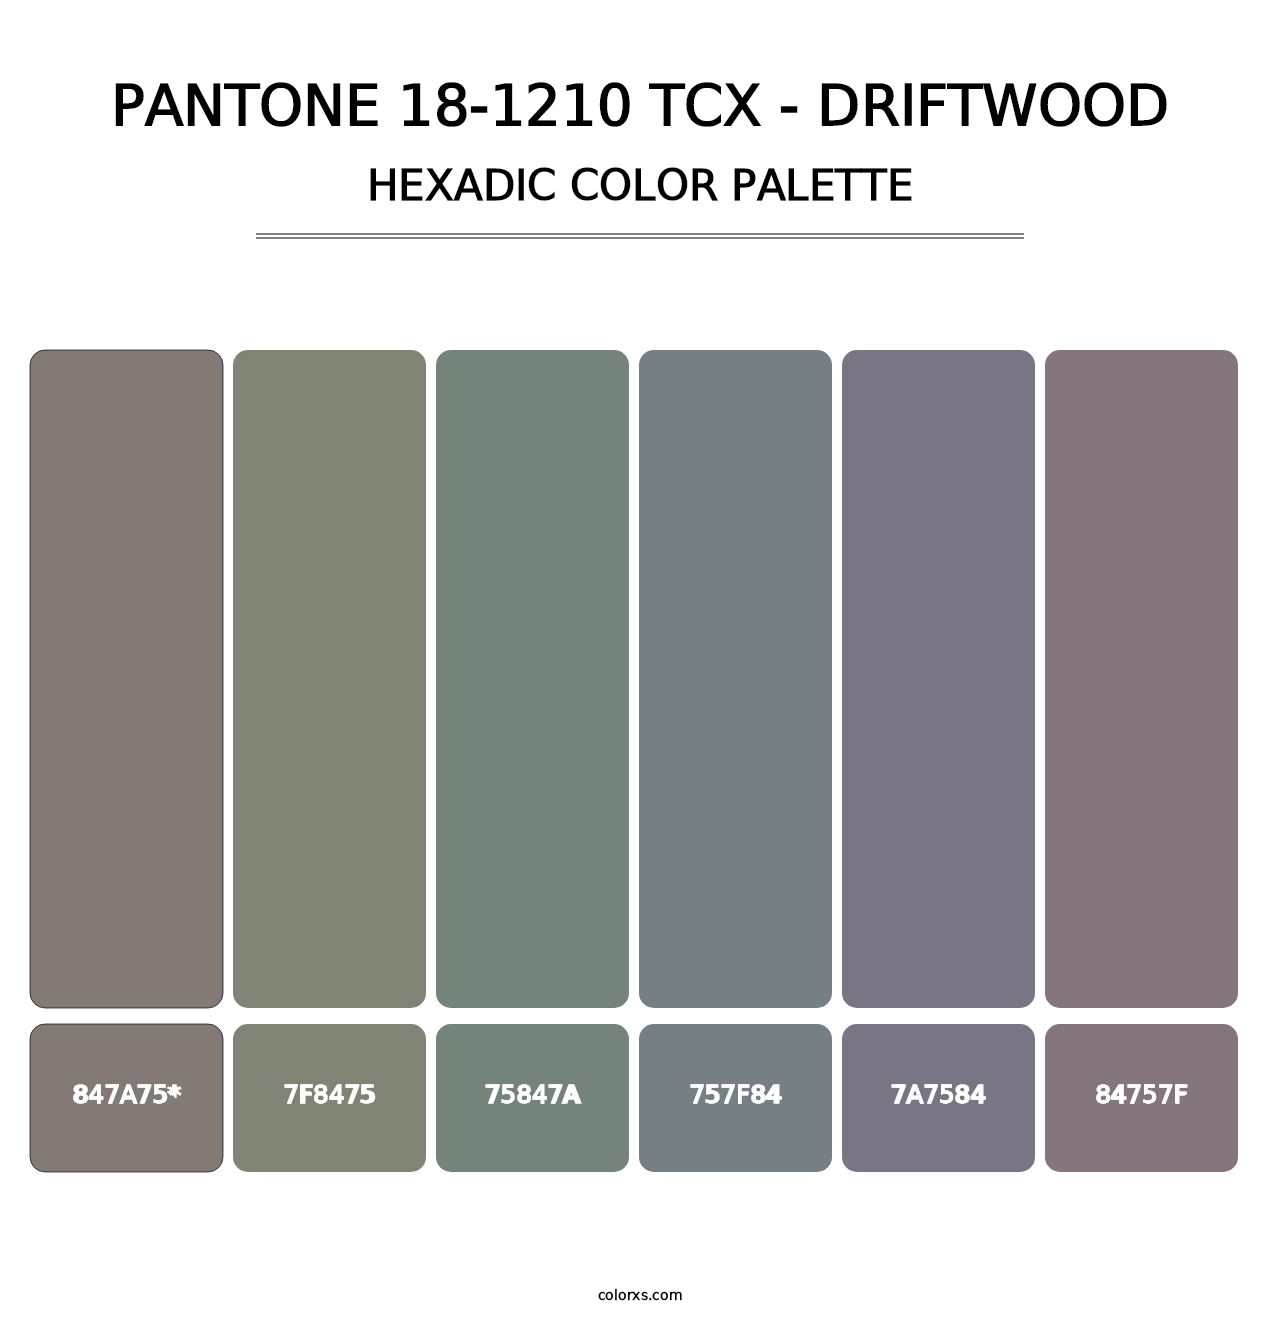 PANTONE 18-1210 TCX - Driftwood - Hexadic Color Palette